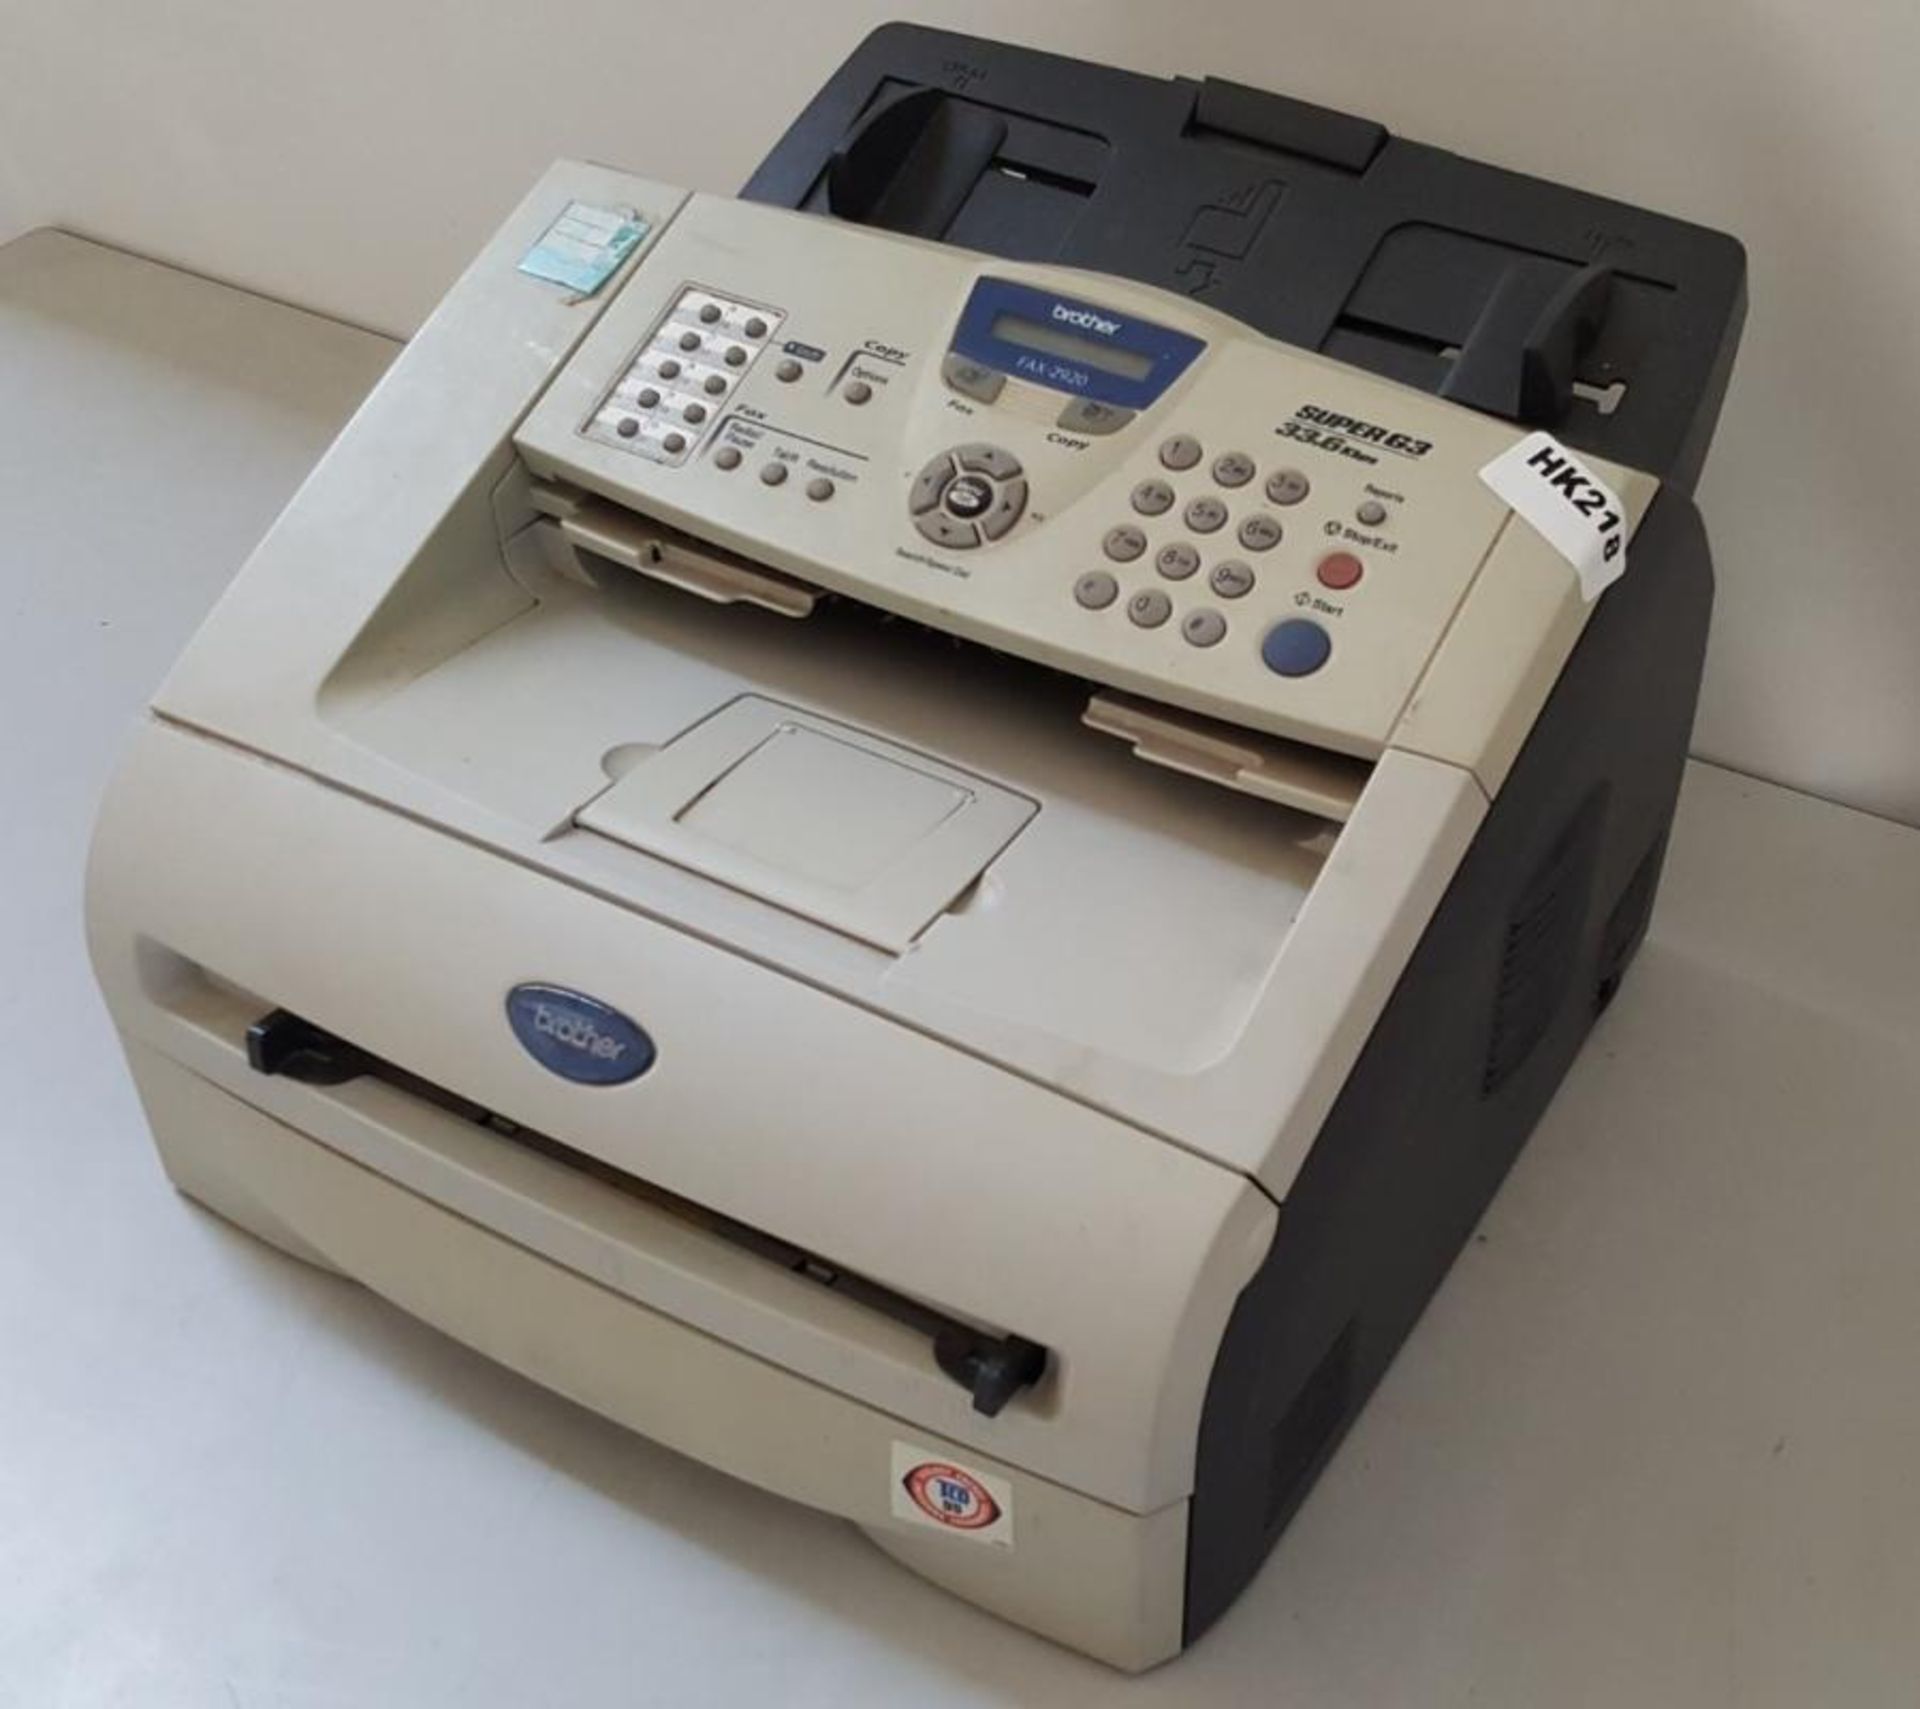 1 x Brother FAX-2920 A4 Fax Machine - Ref HK218 AB2 - CL394 - Location: Altrincham WA14 - Image 2 of 3